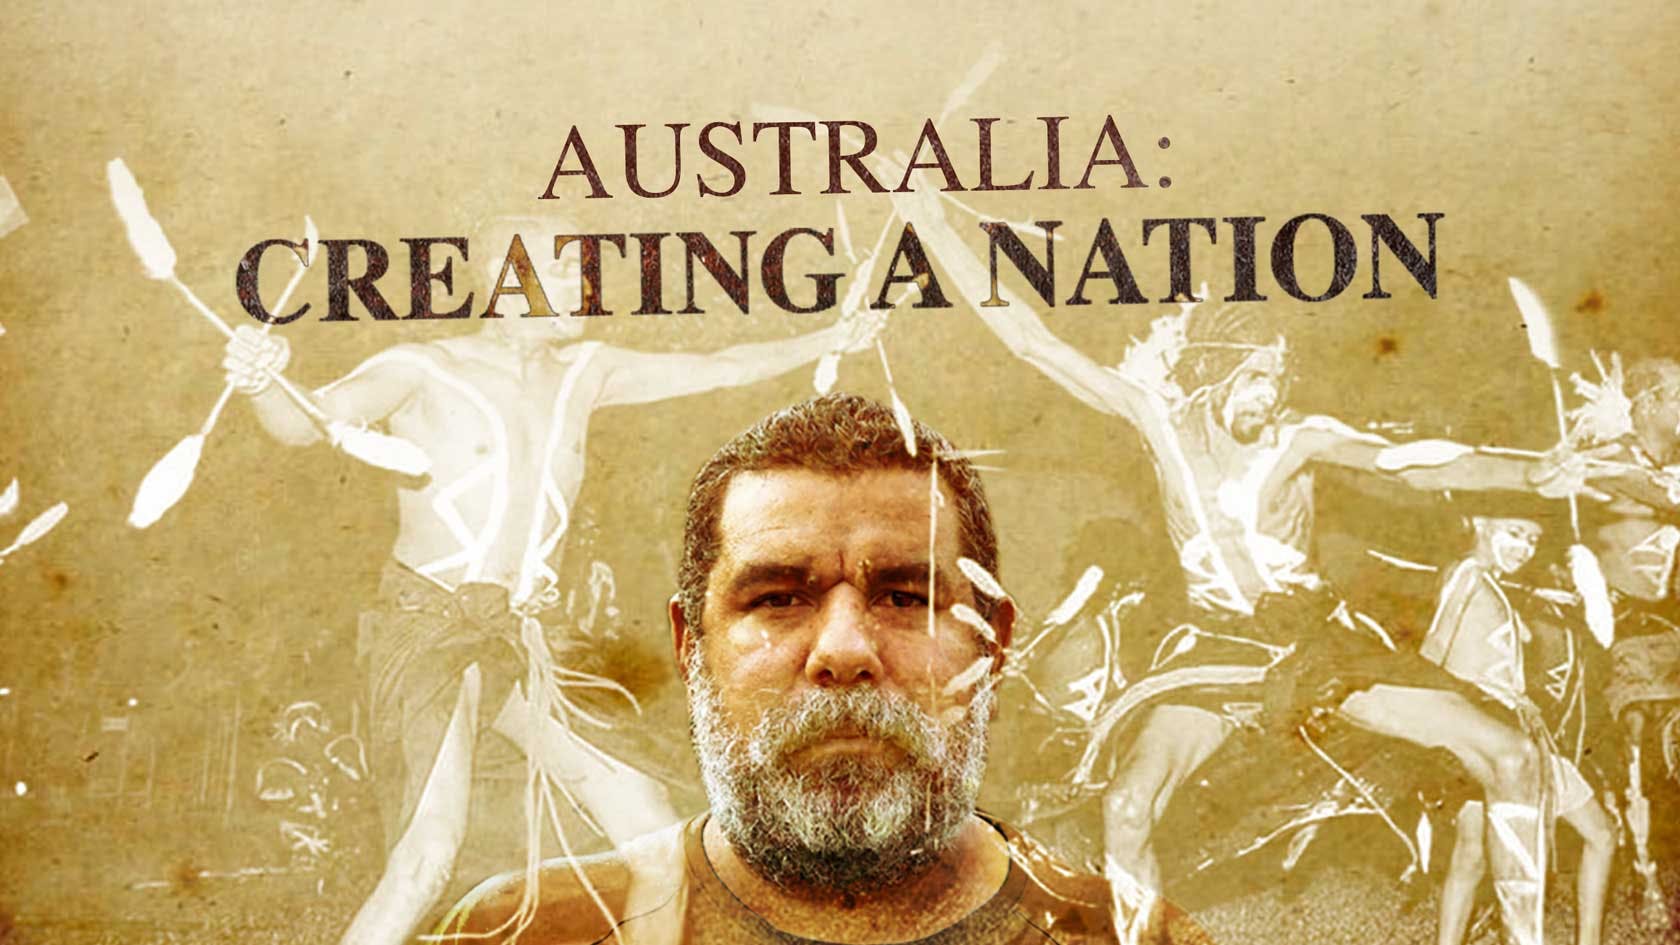 Australia: Creating a Nation